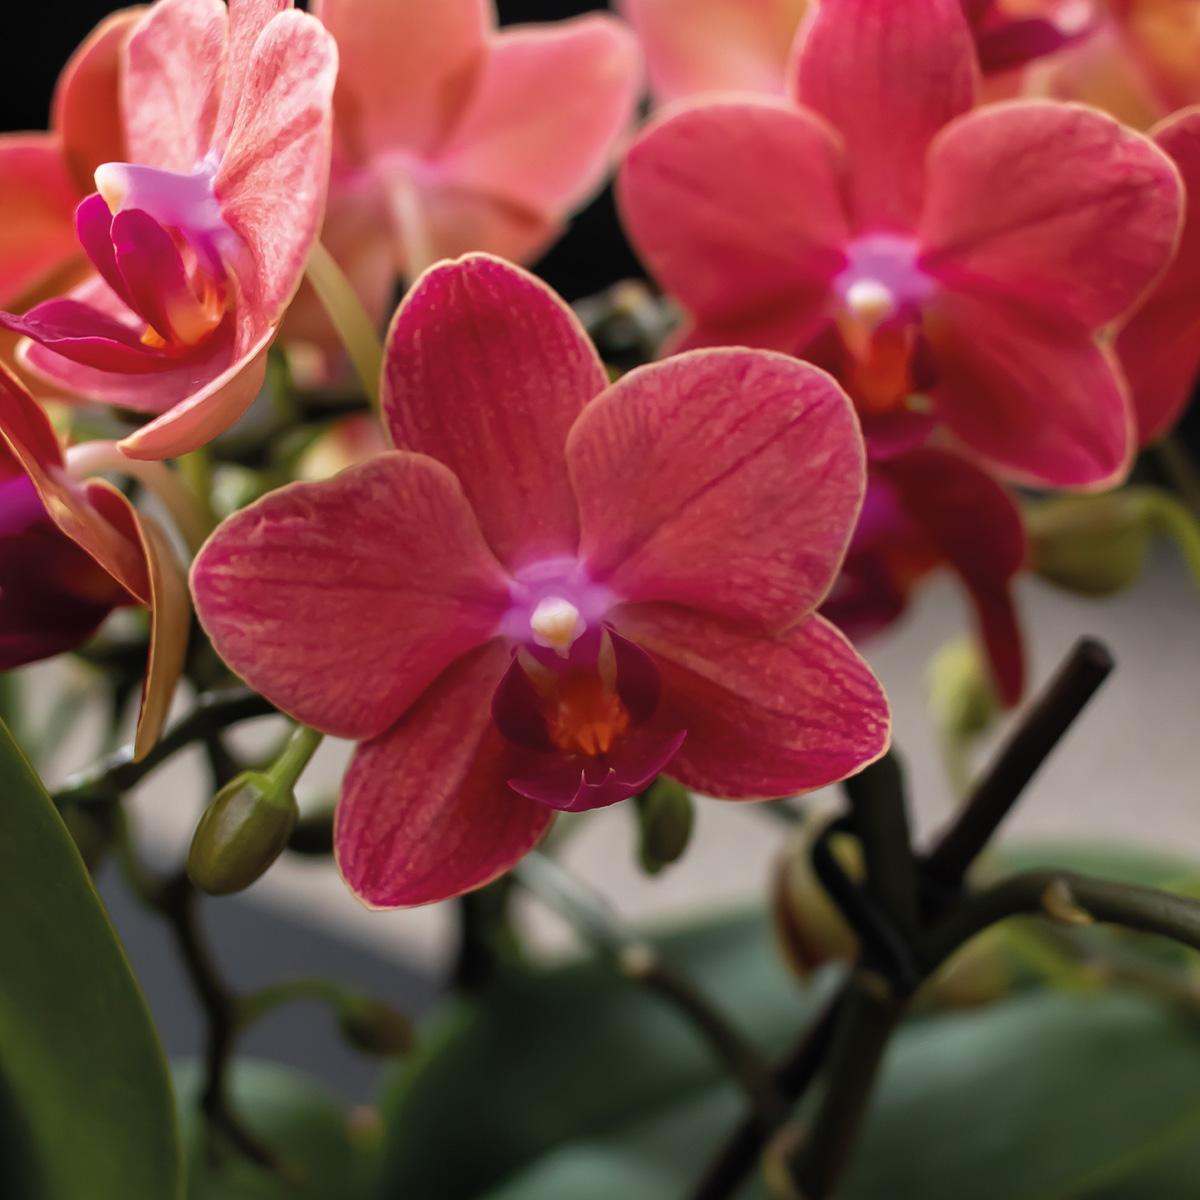 Kolibri Company | Gift set Scandic terracotta | Plantenset met oranje Phalaenopsis Orchidee en Succulenten incl. keramieken sierpotten